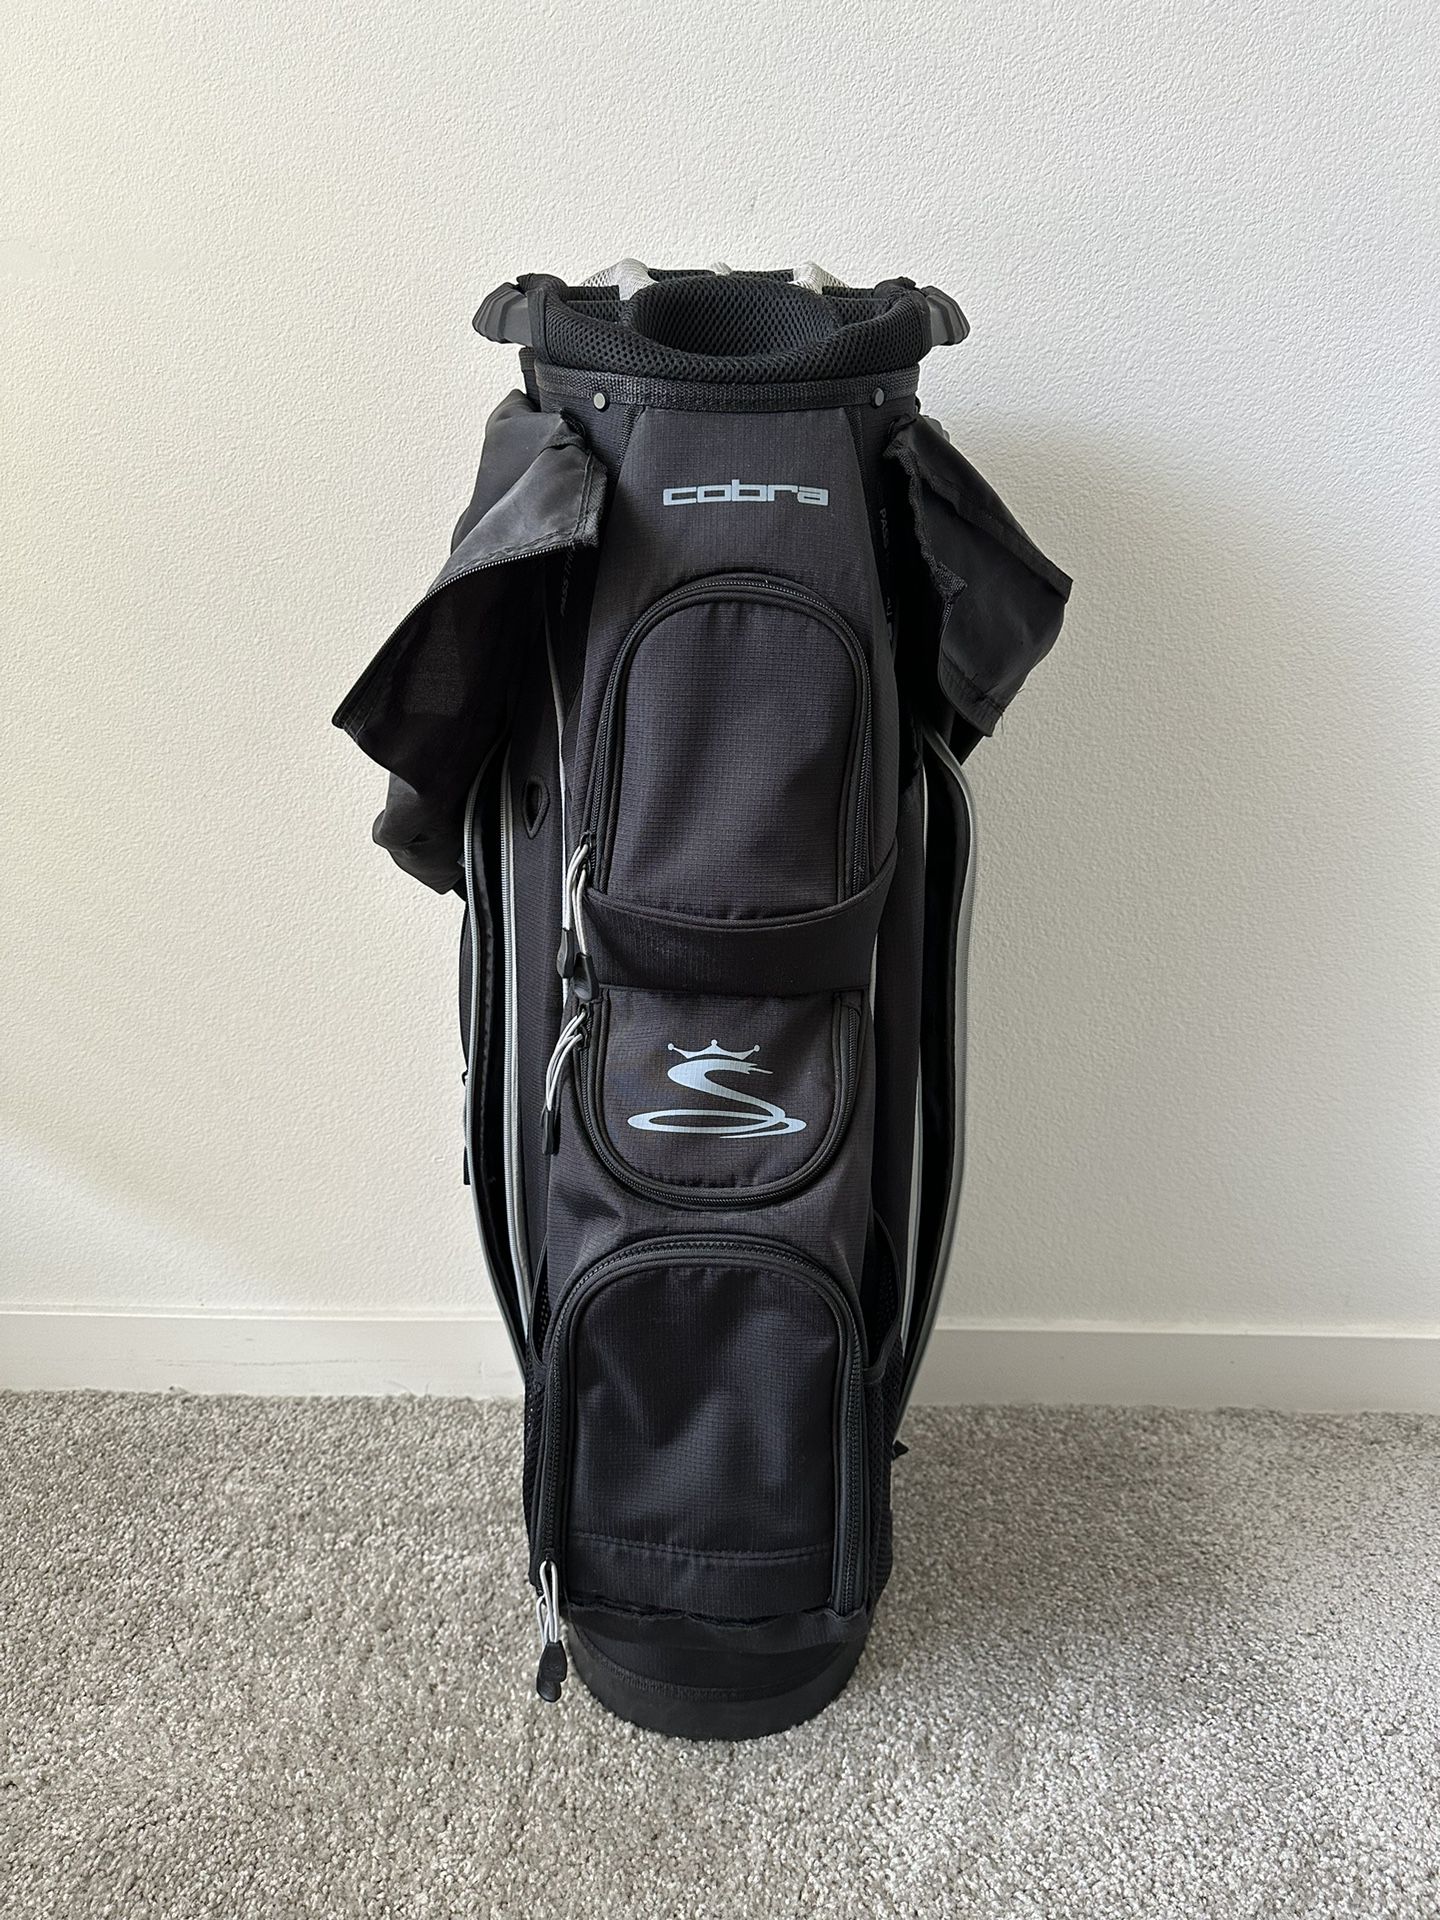 New Cobra Ultralight Pro 14-Way Golf Bag